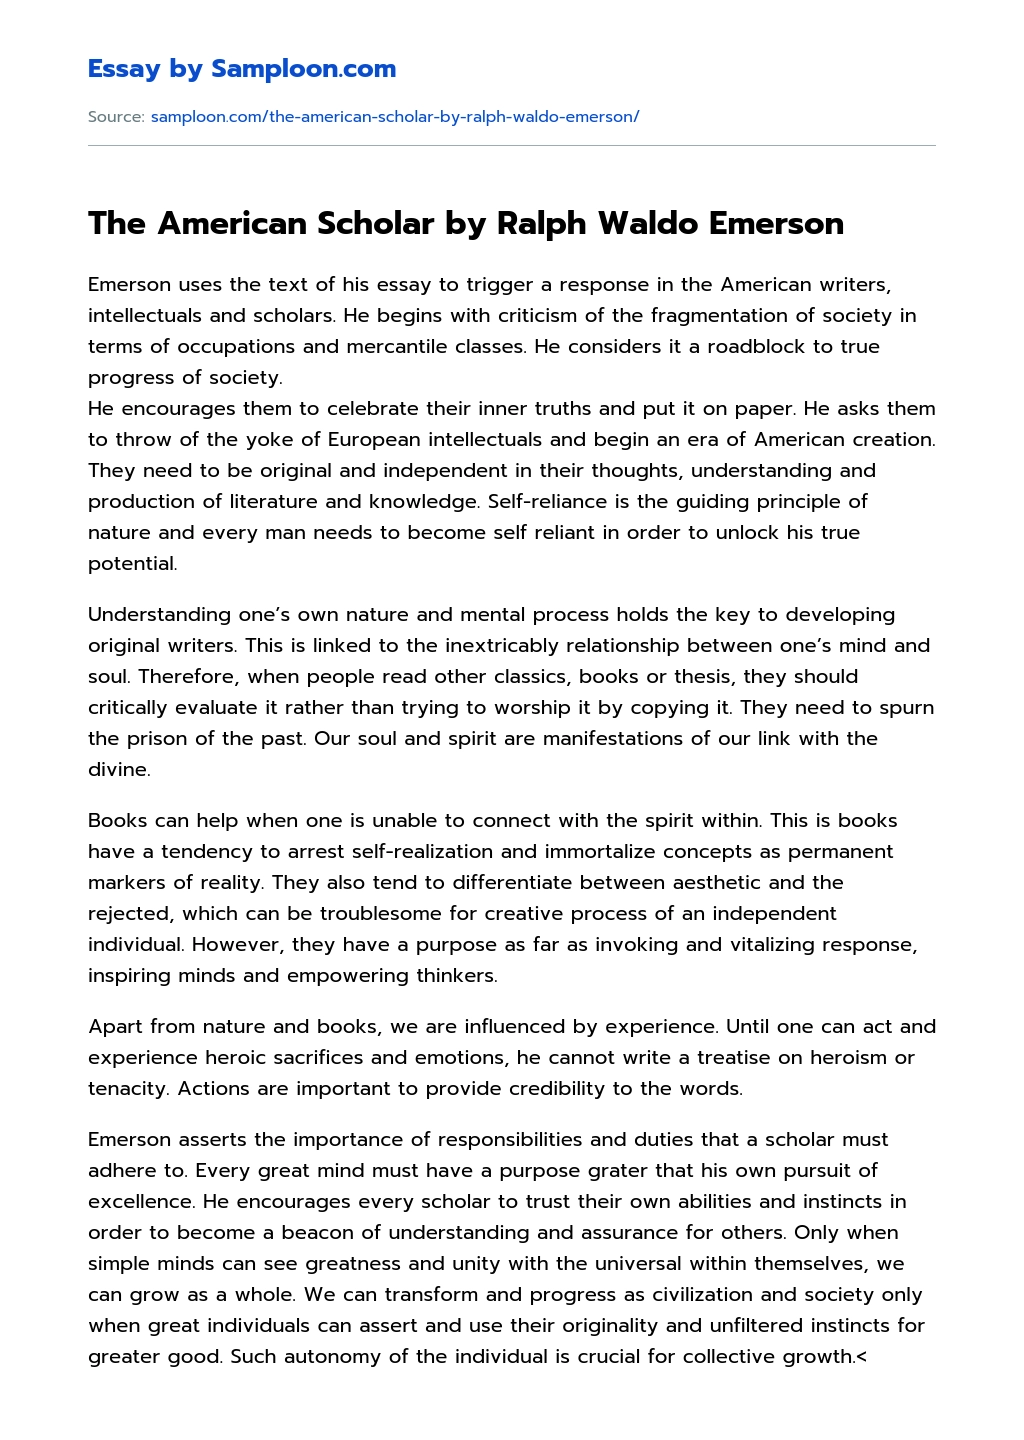 The American Scholar by Ralph Waldo Emerson essay